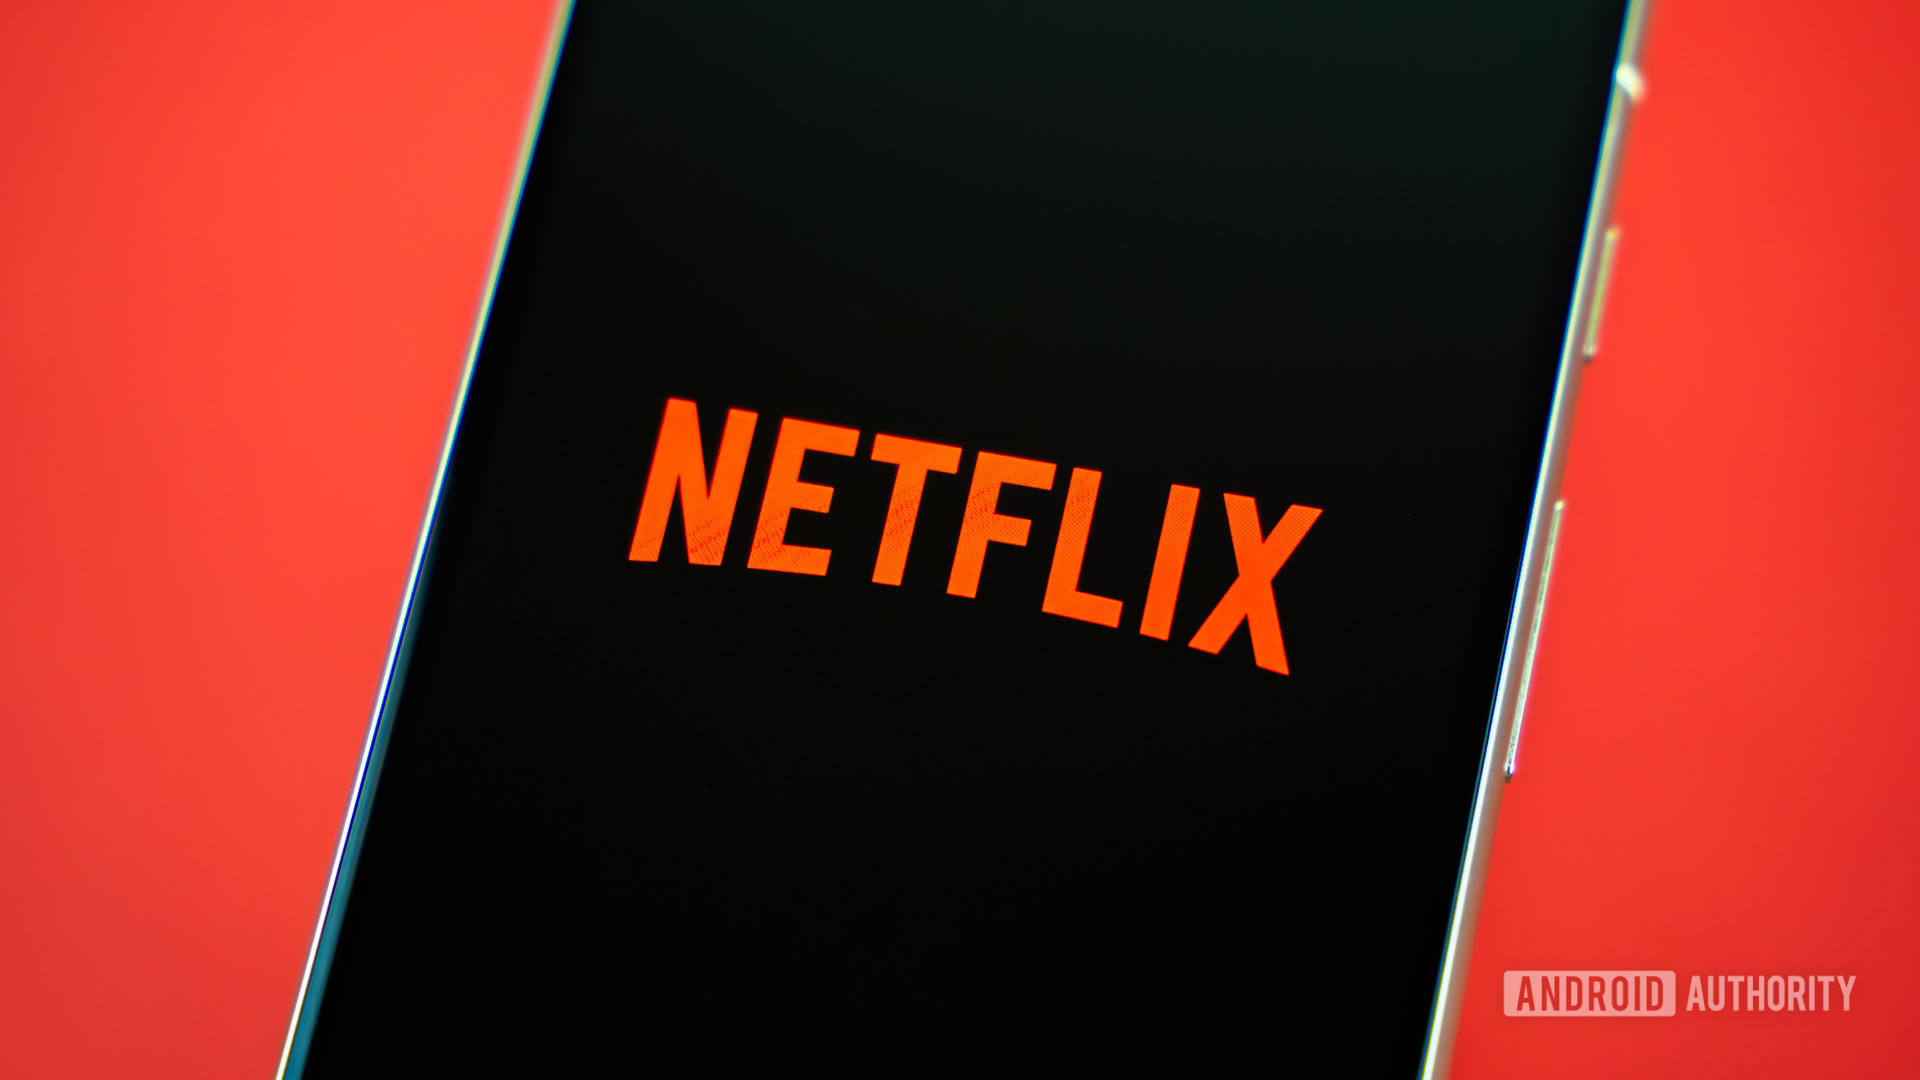 Netflix logo on smartphone stock photo (1)